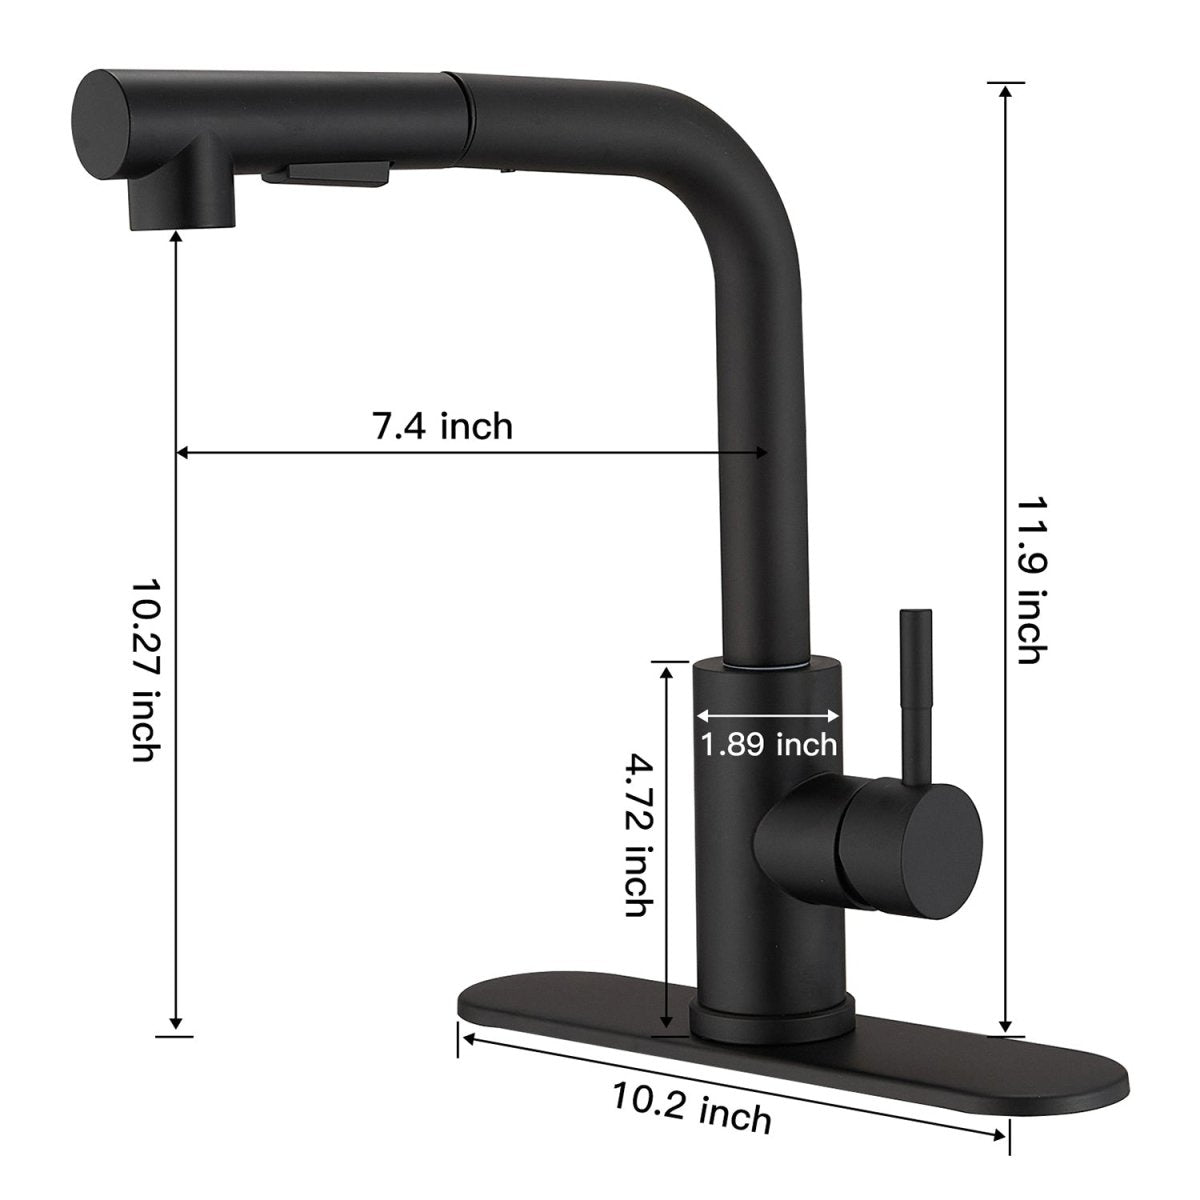 Single Hole Single-Handle Pull out Kitchen Faucet Black - buyfaucet.com